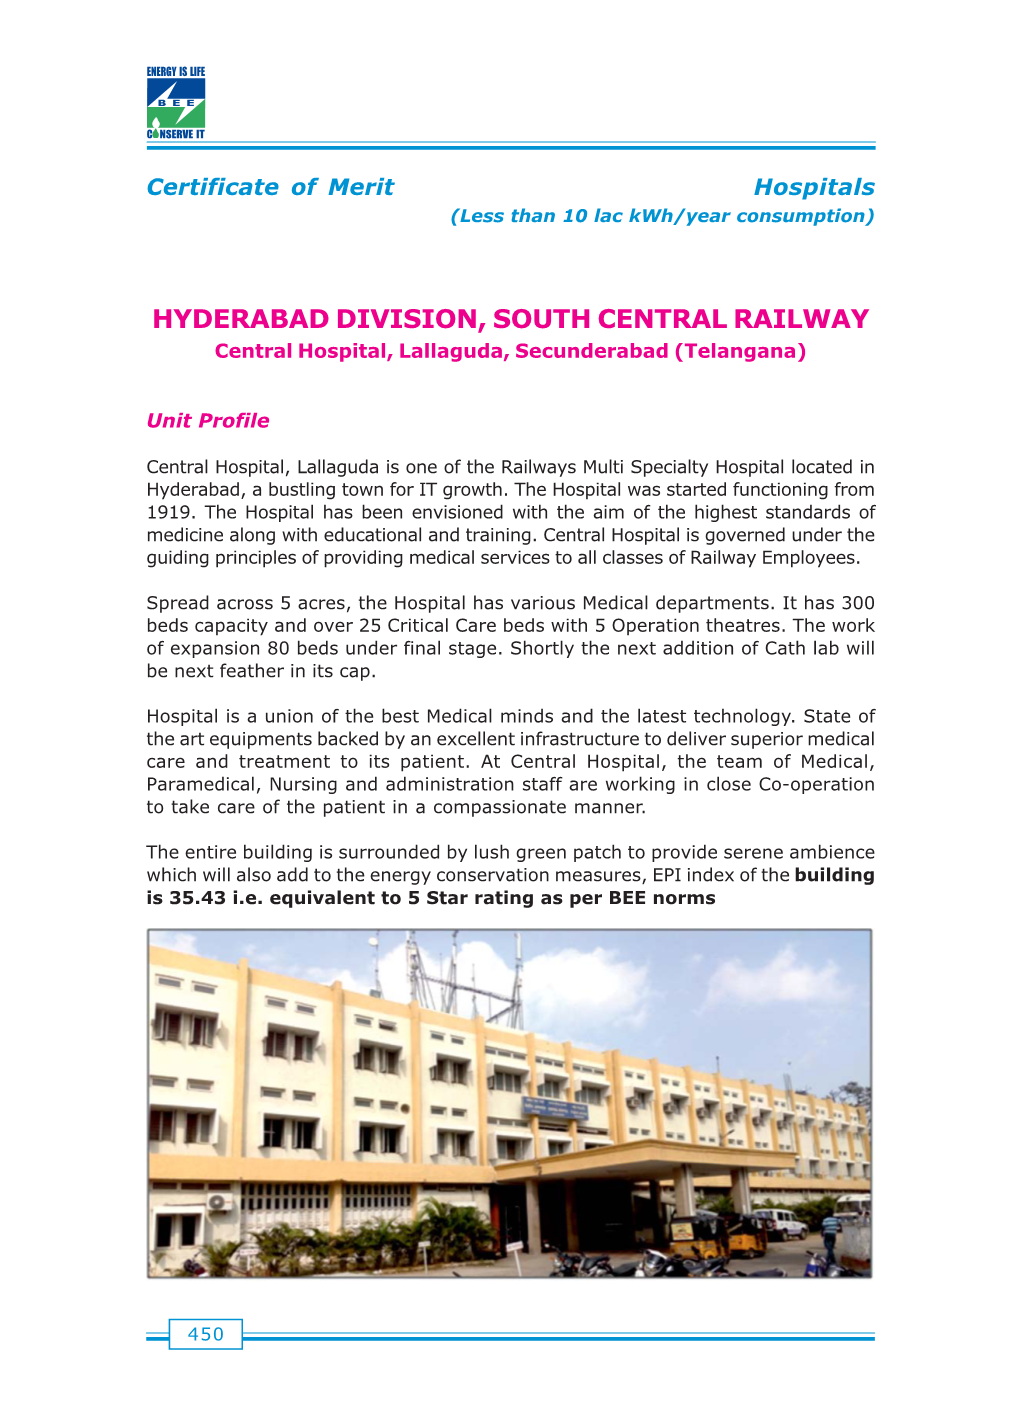 Hyderabad Division, South Central Railway,Central Hospital, Lallaguda Secunderabad